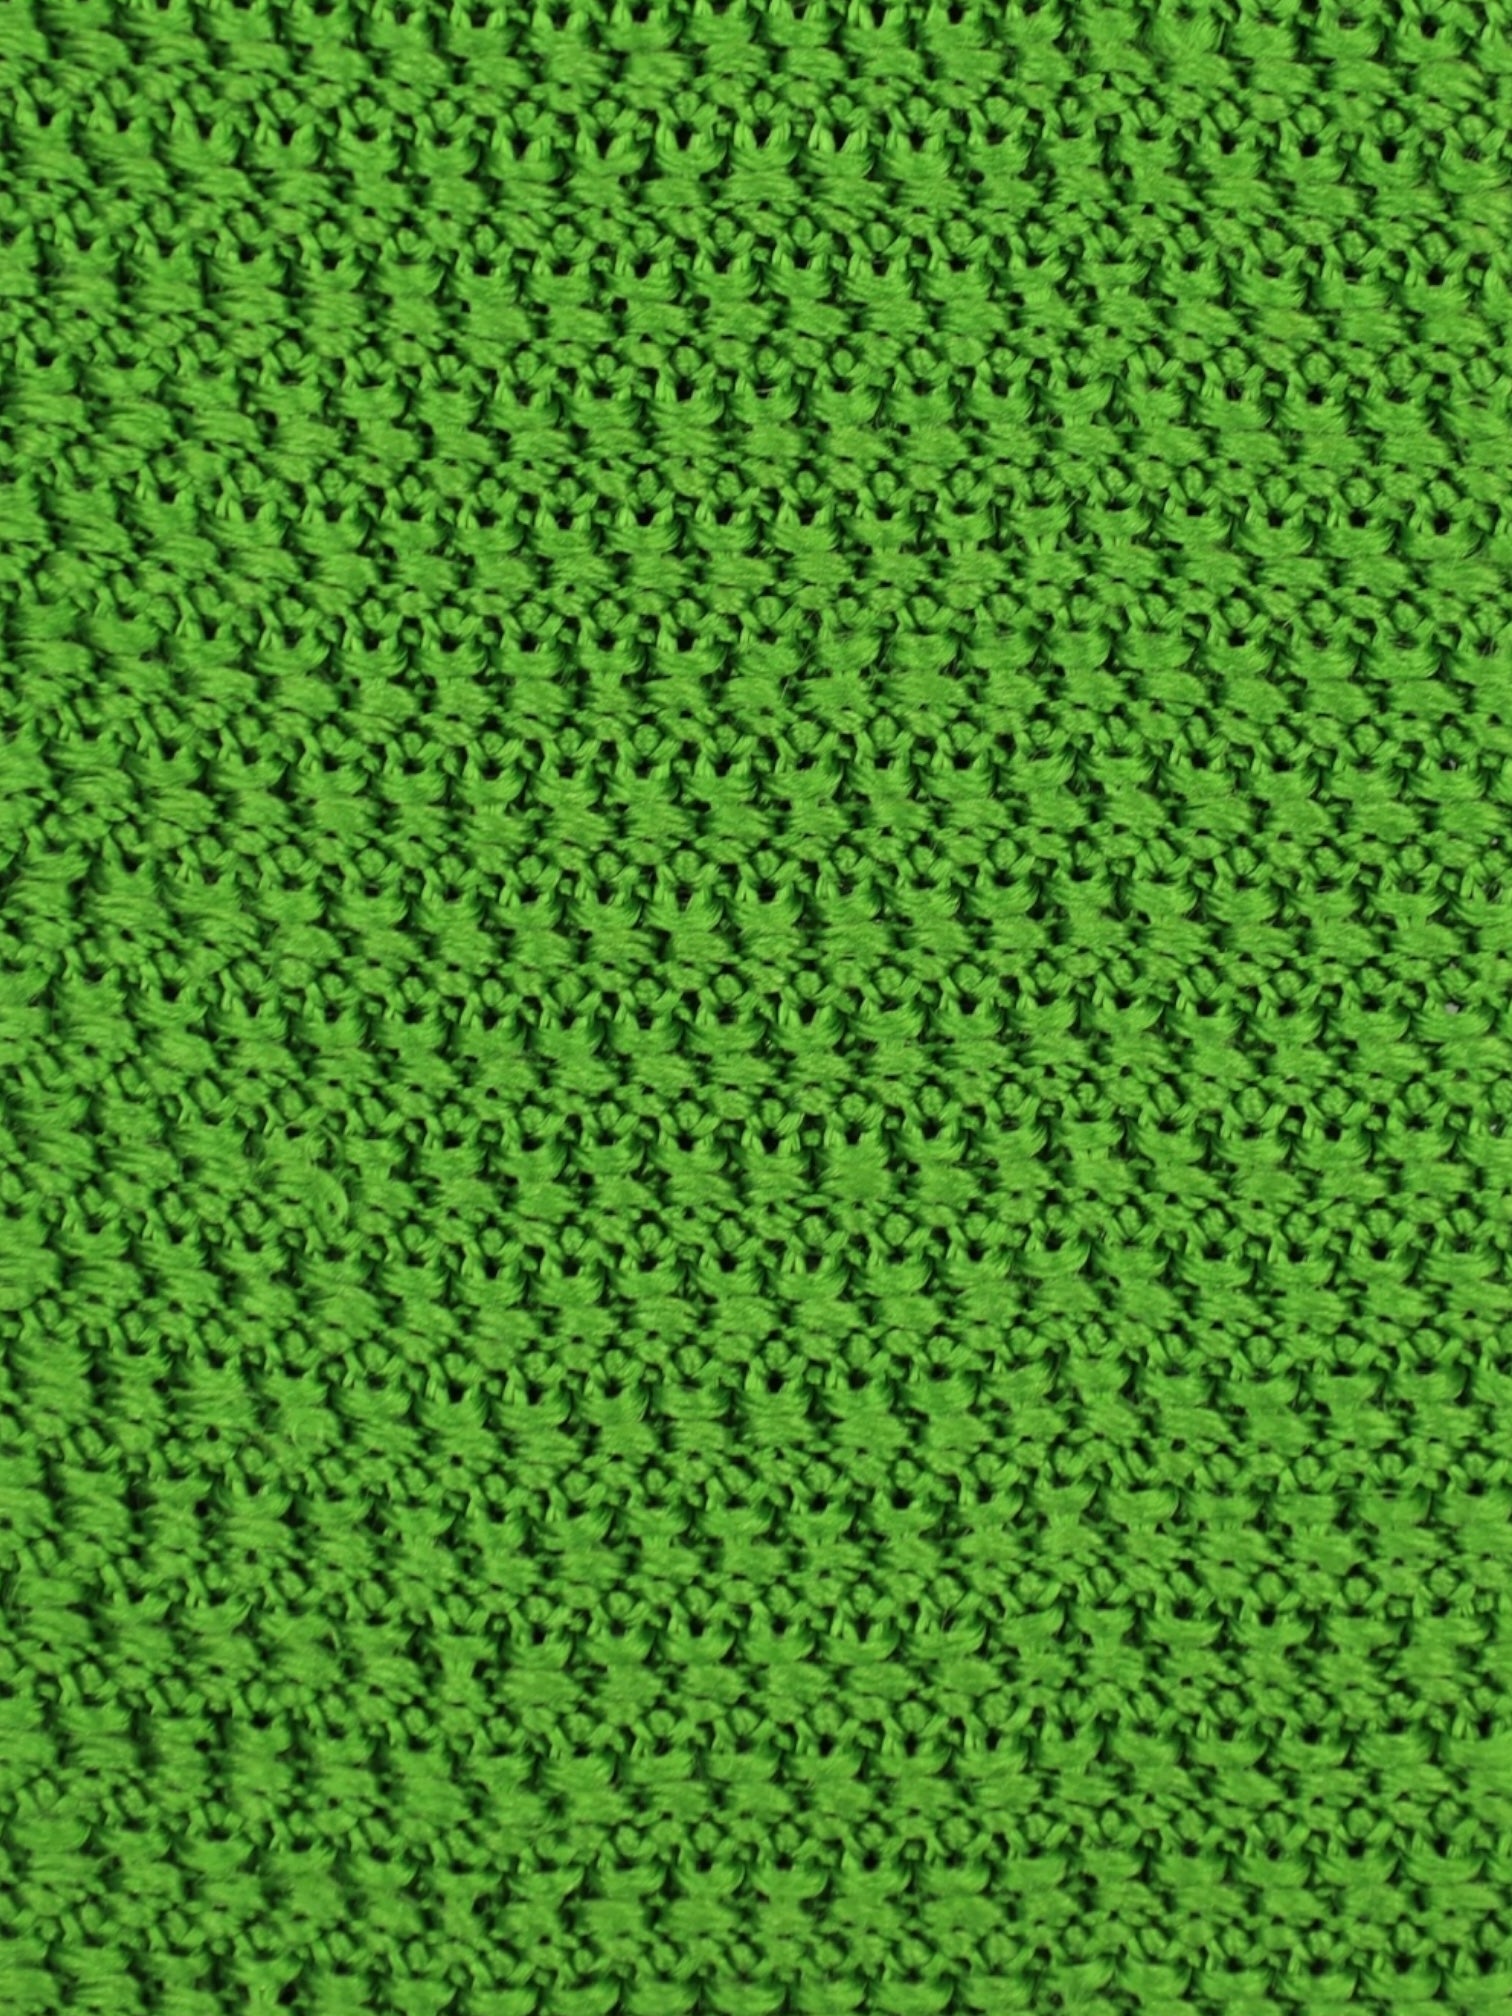 Kiton Green Knitted Silk Tie